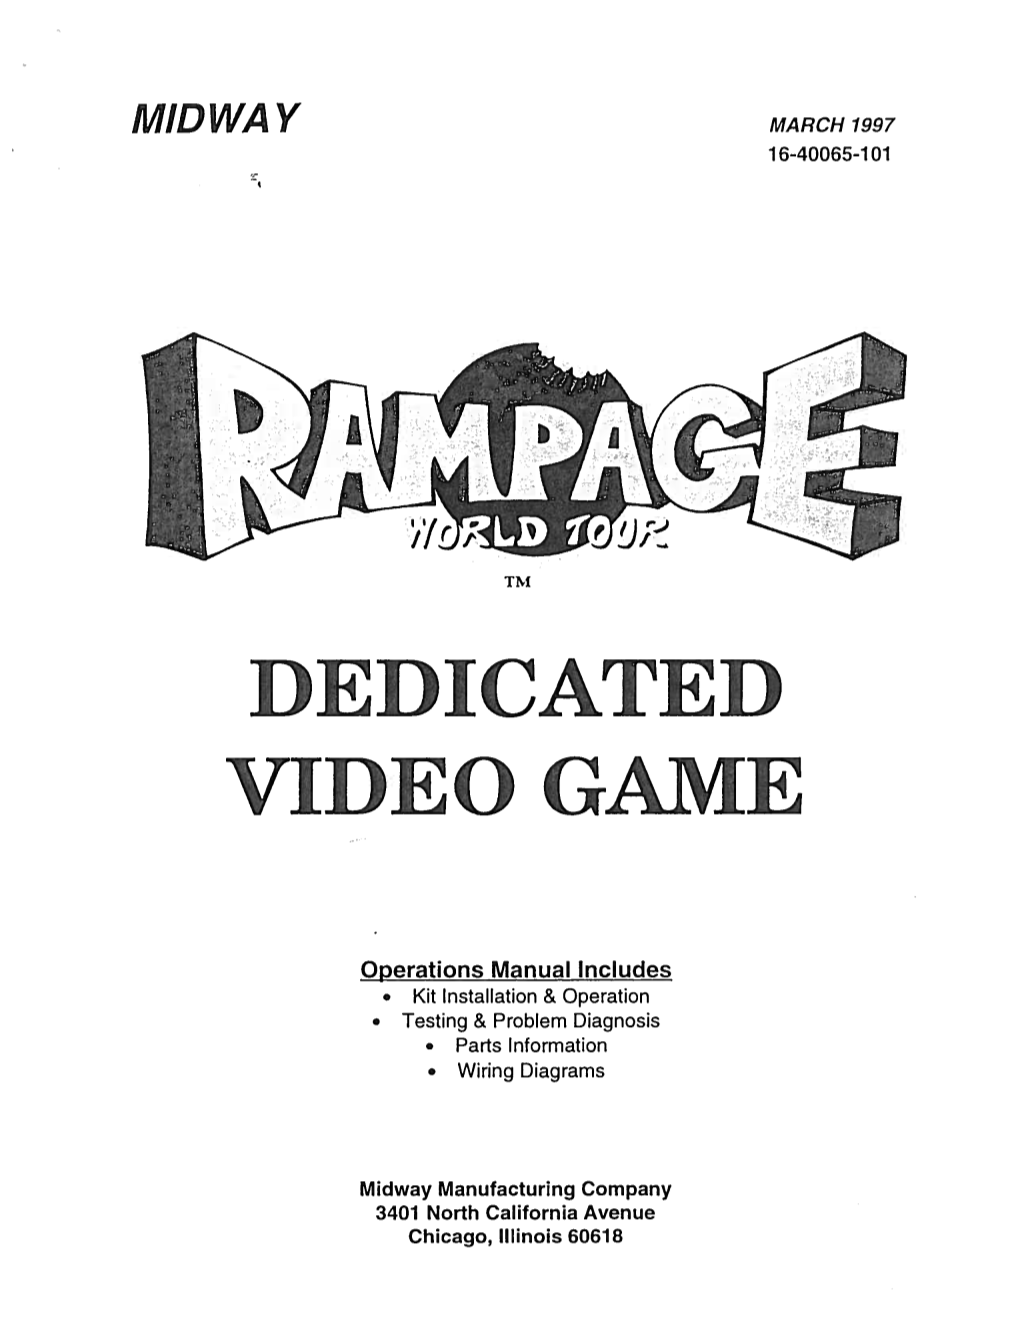 Rampage World Tour Operations Manual